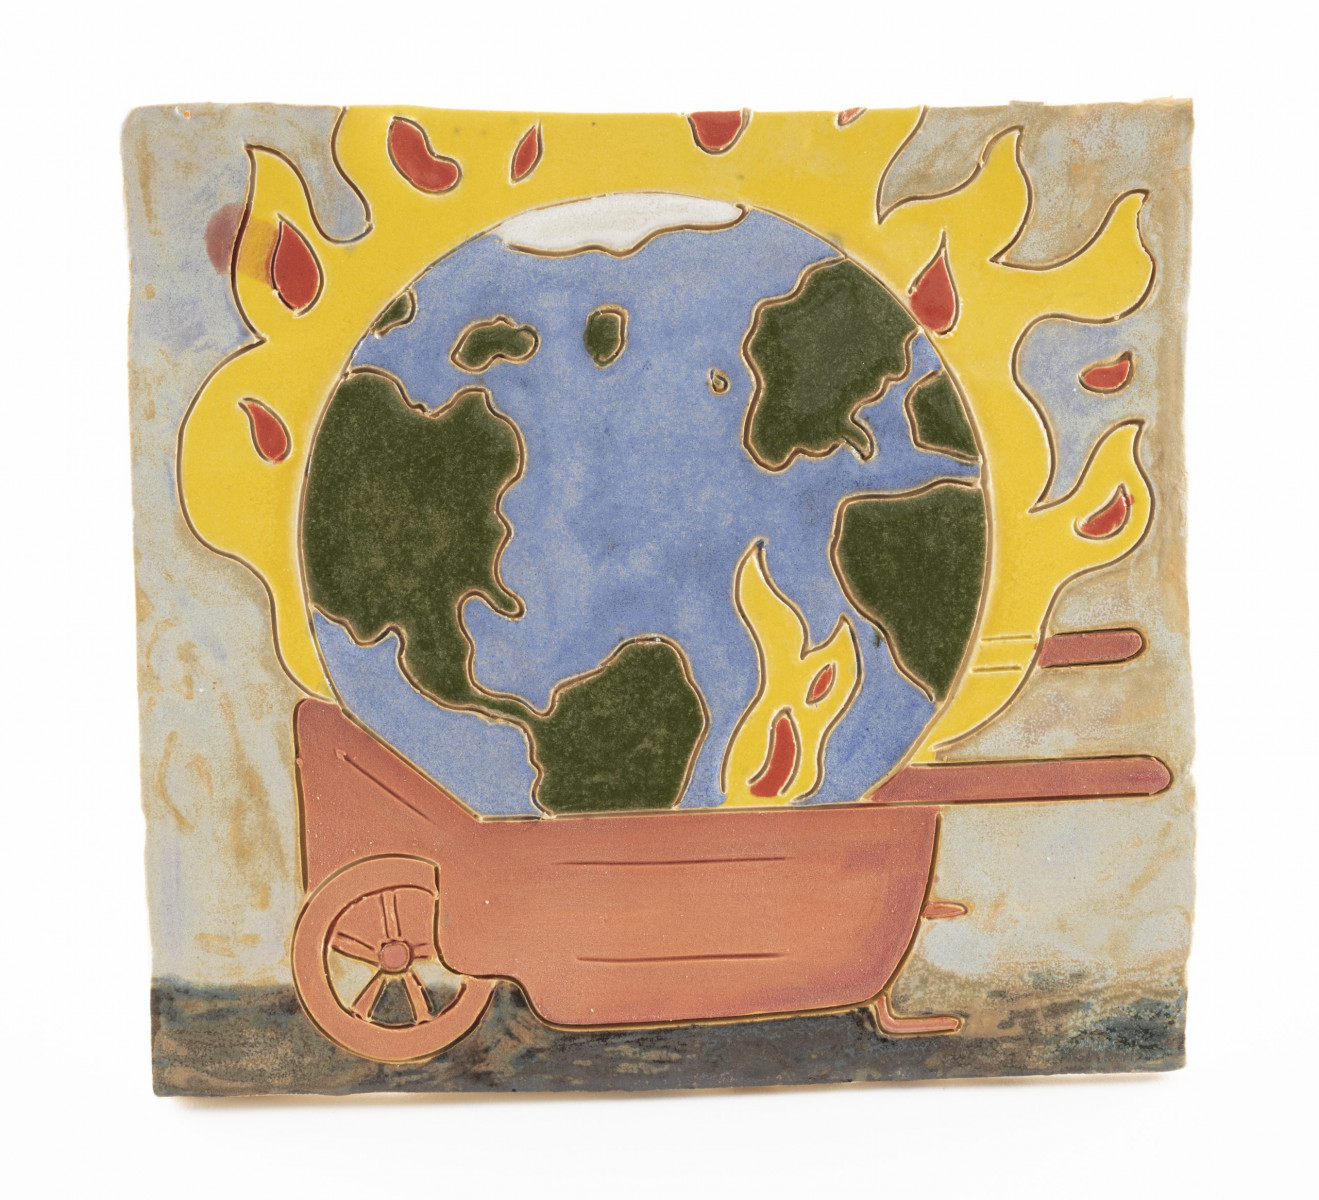 Kevin McNamee-Tweed. <em>Planet in a Pushcart (Fire)</em>, 2023. Glazed ceramic, 6 7/8 x 6 3/8 inches  (17.5 x 16.2 cm)